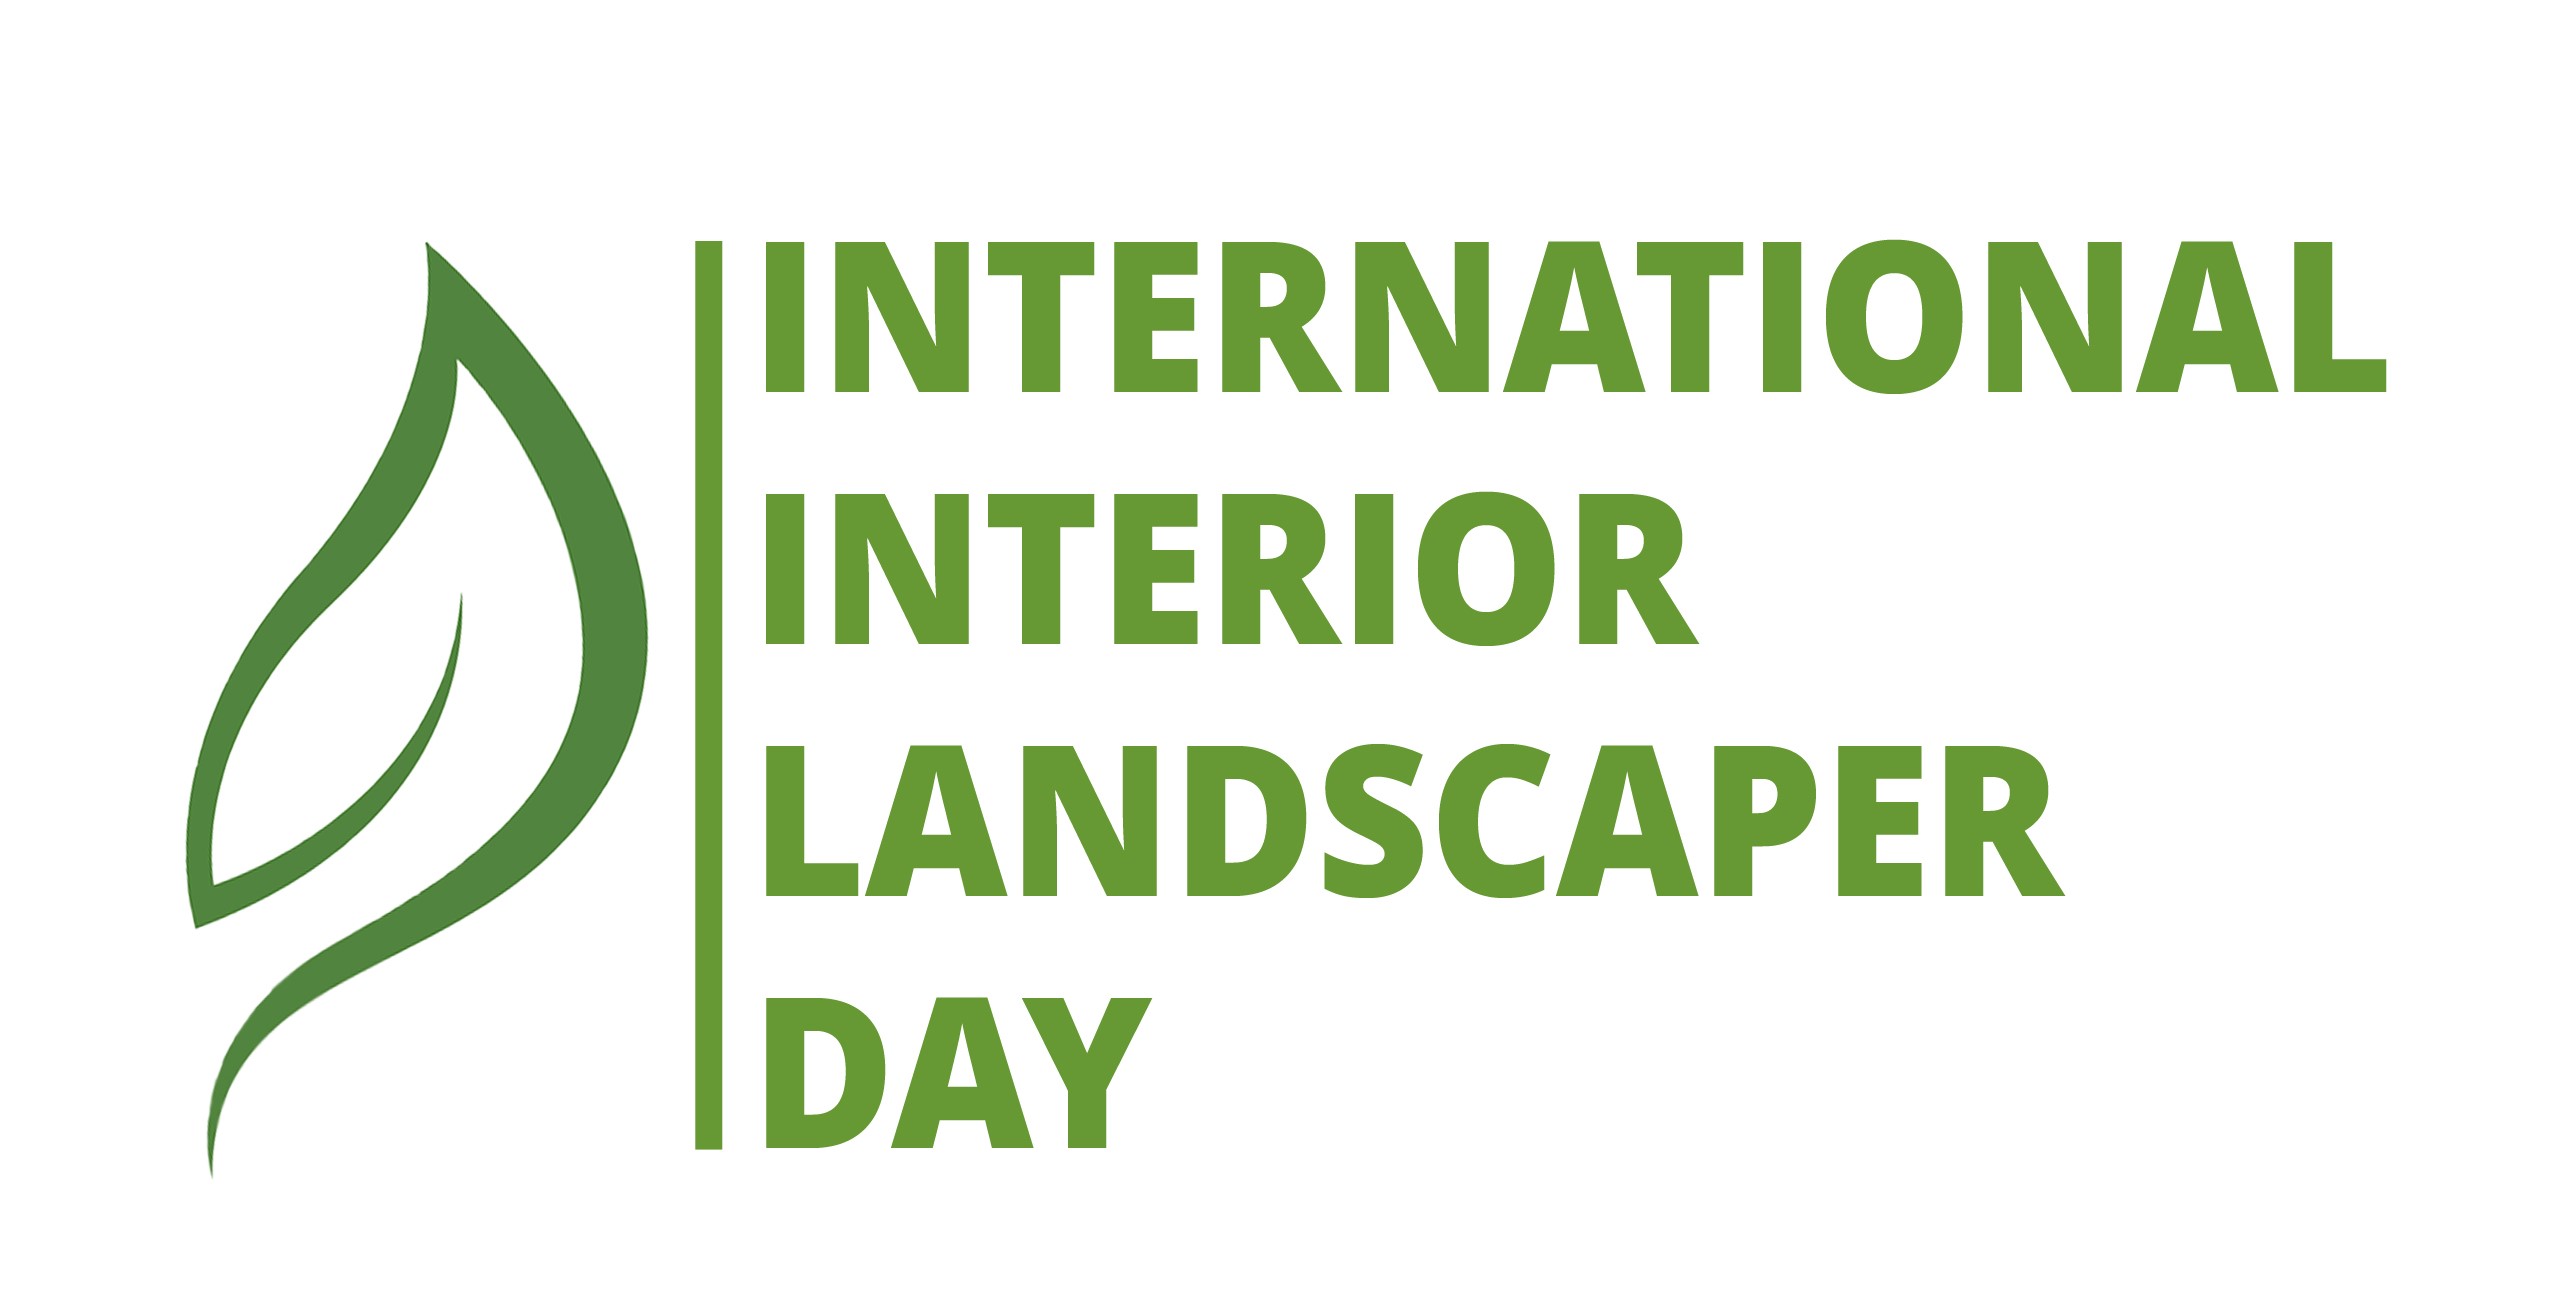 International Int Landsc Day copy